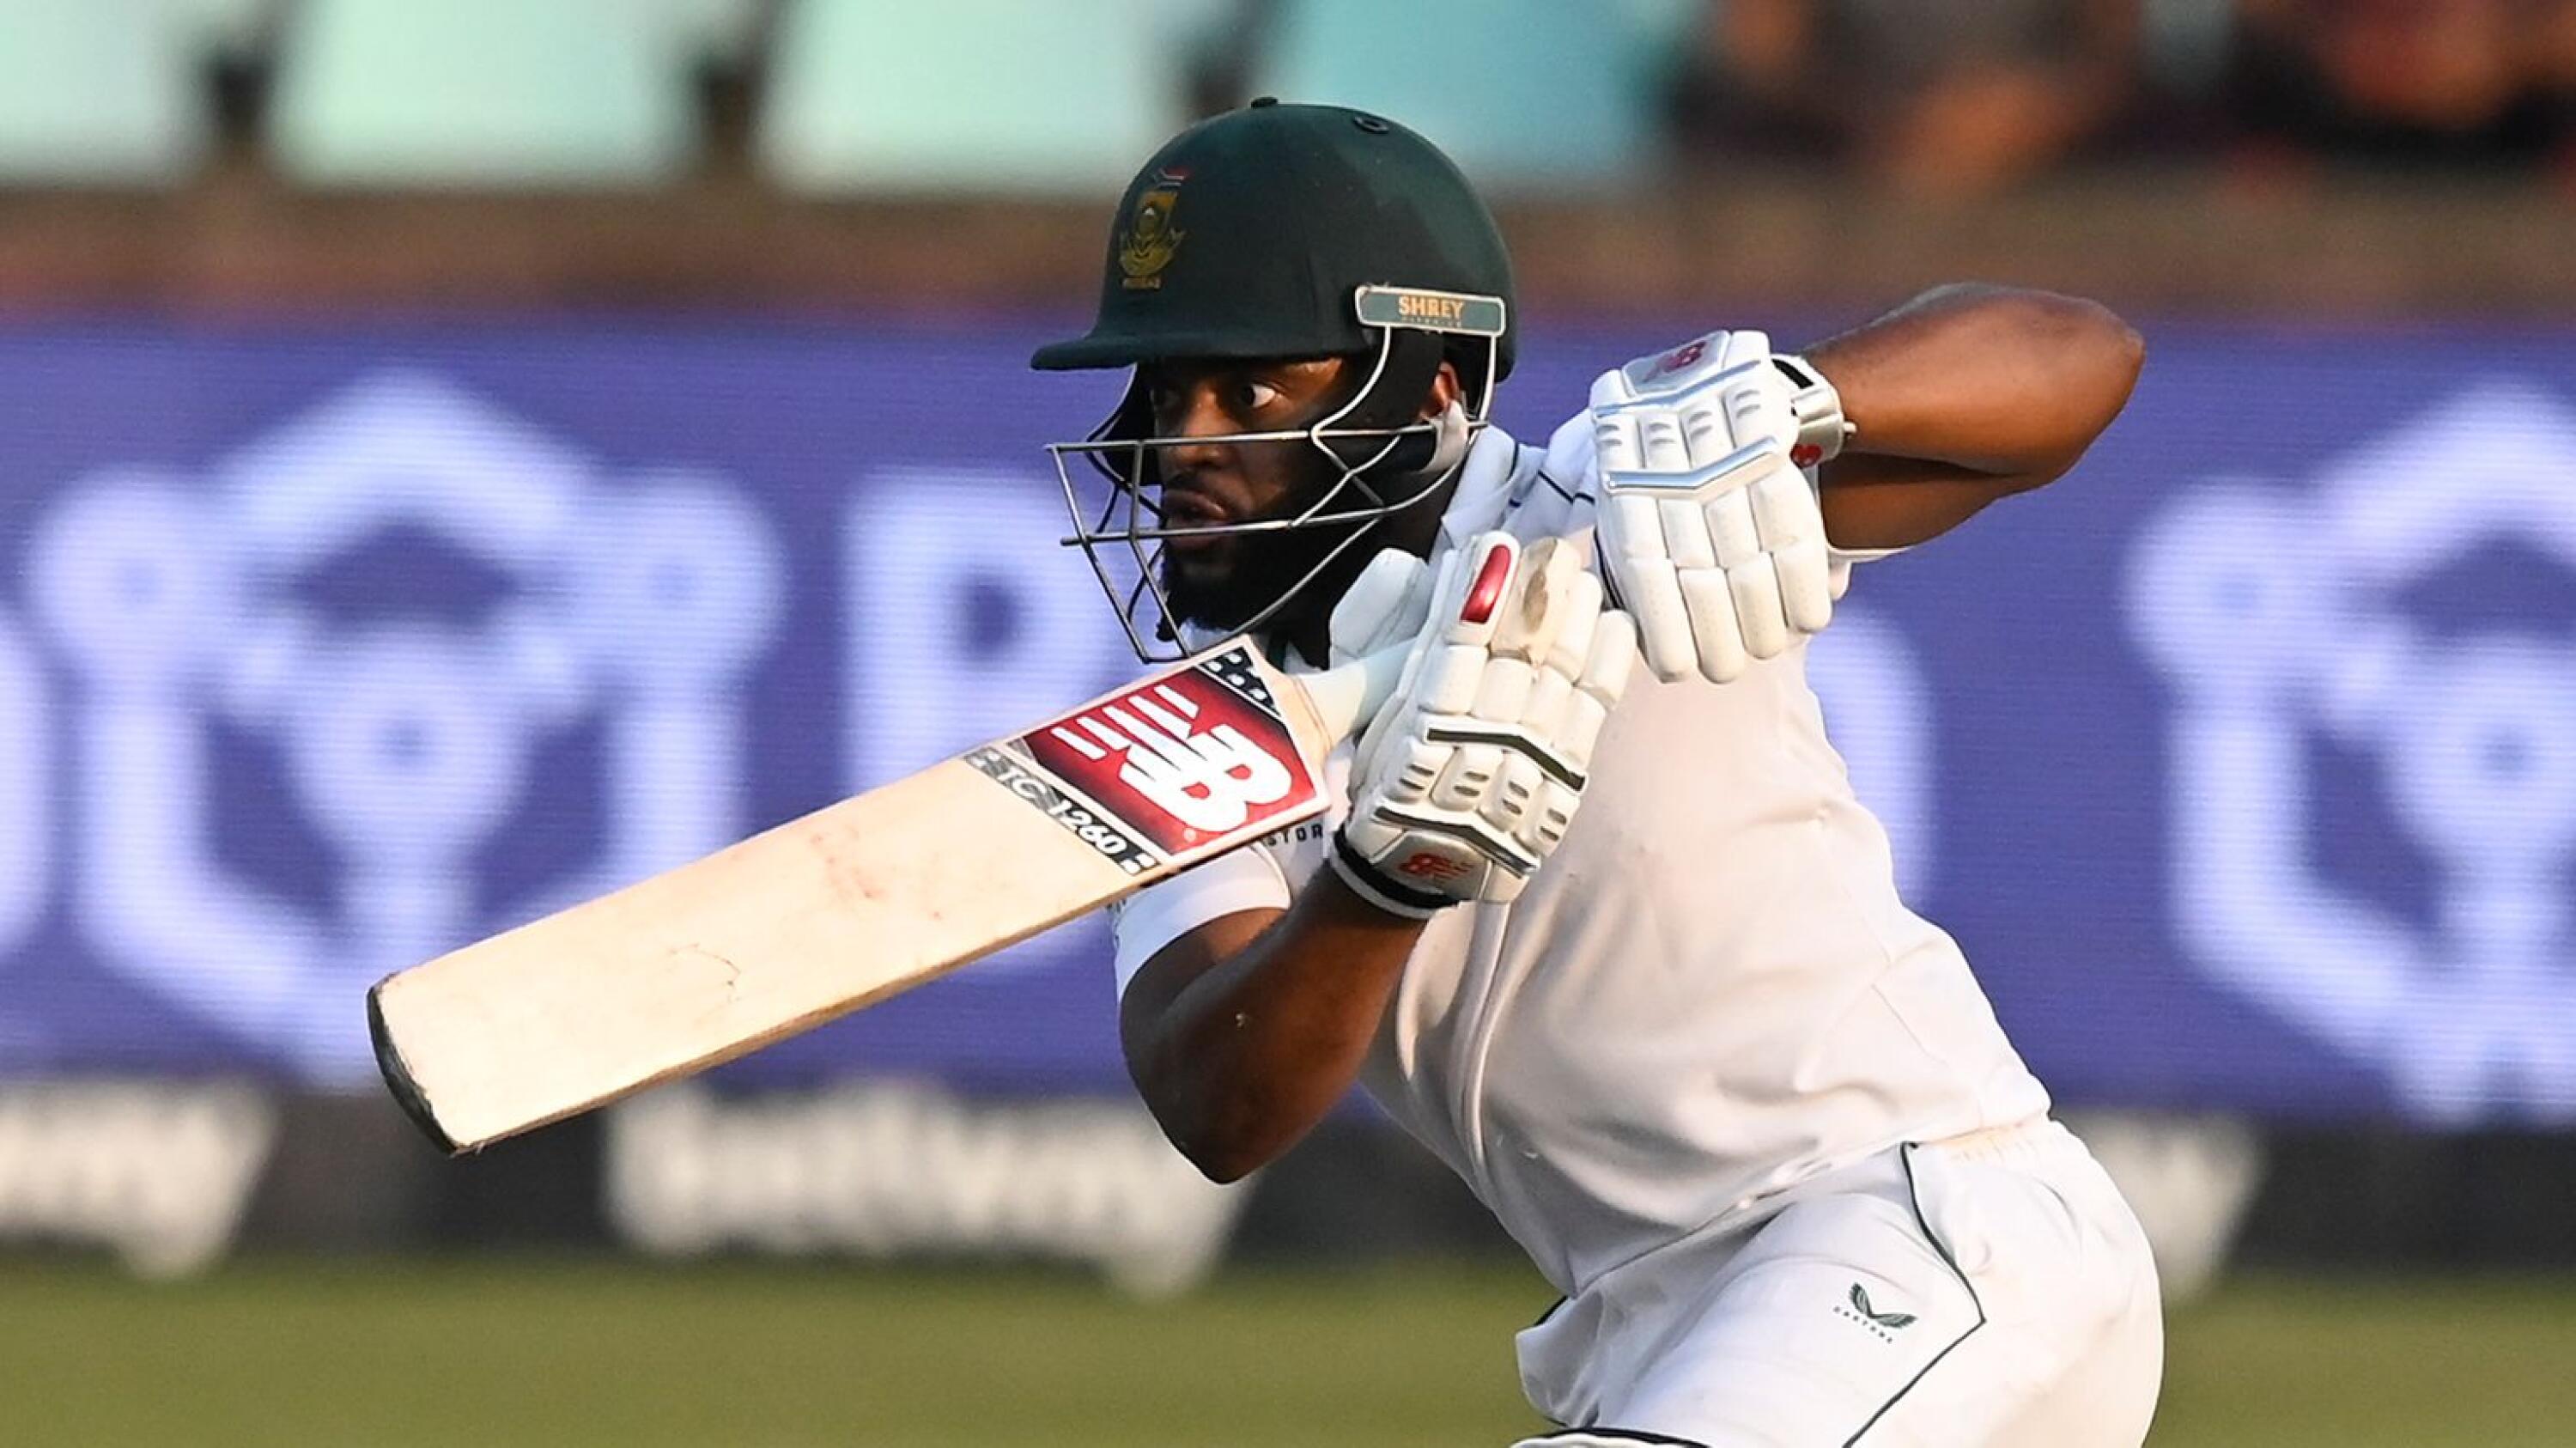 Proteas batsman Temba Bavuma plays shot onto the offside during a Test match